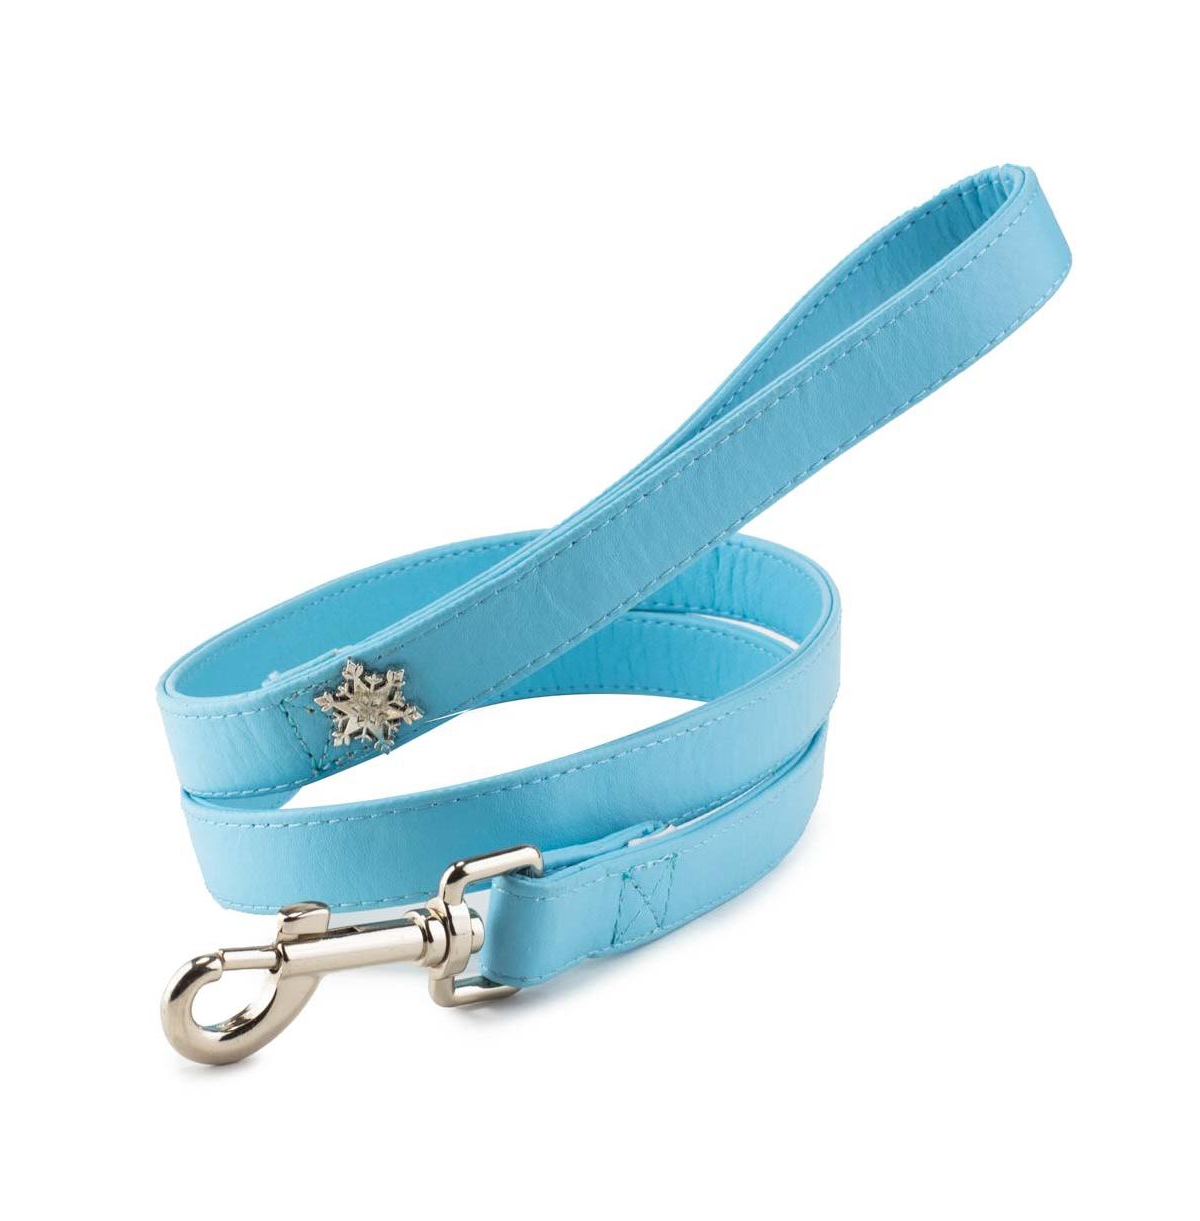 Disney Pet Leash Dog Leash Frozen 2 Light Blue Pu Leather With Snowflake Embellishment 6 Feet Long 0.75 Inch Wide - Blue